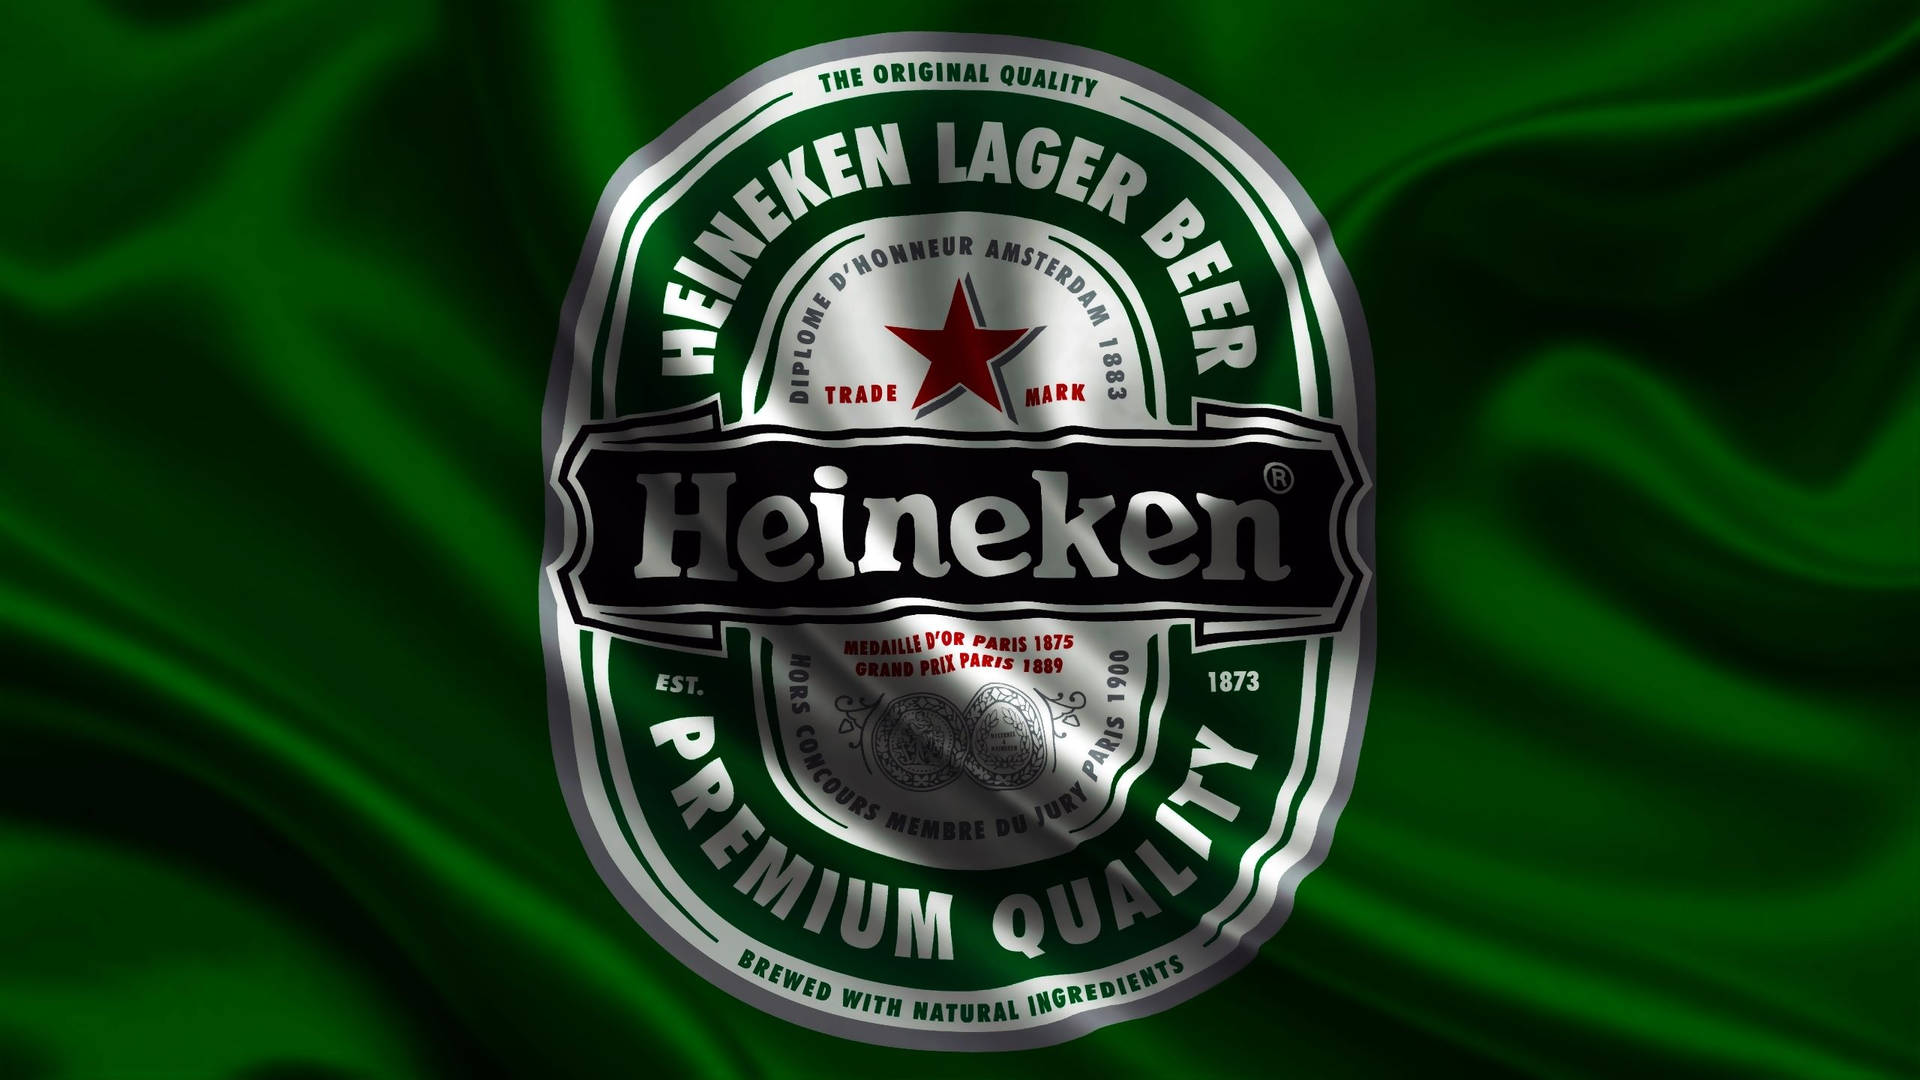 Logode Cerveza Heineken Lager En Tela De Seda Fondo de pantalla